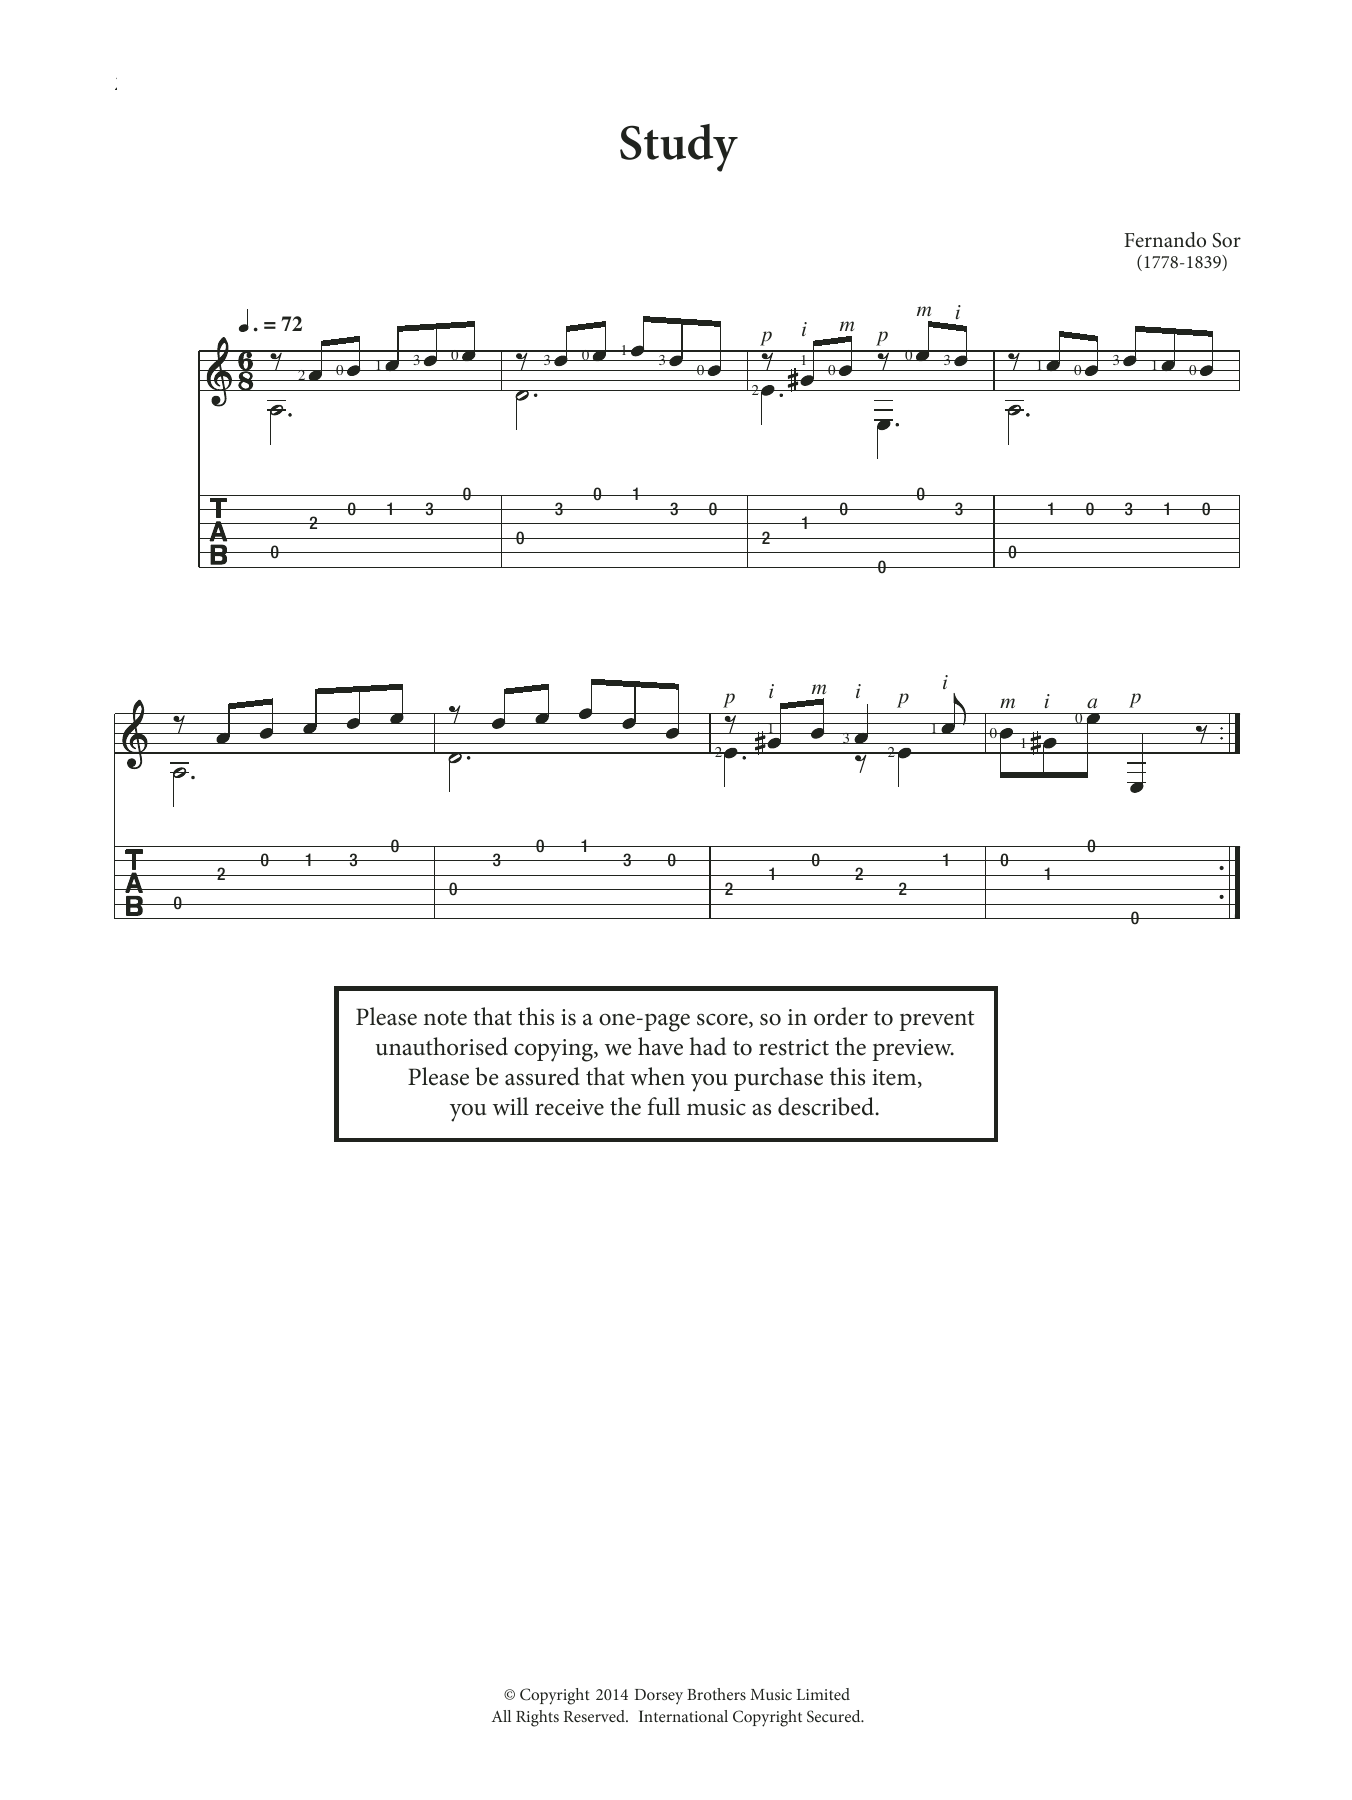 Fernando Sor Study sheet music notes and chords arranged for Easy Guitar